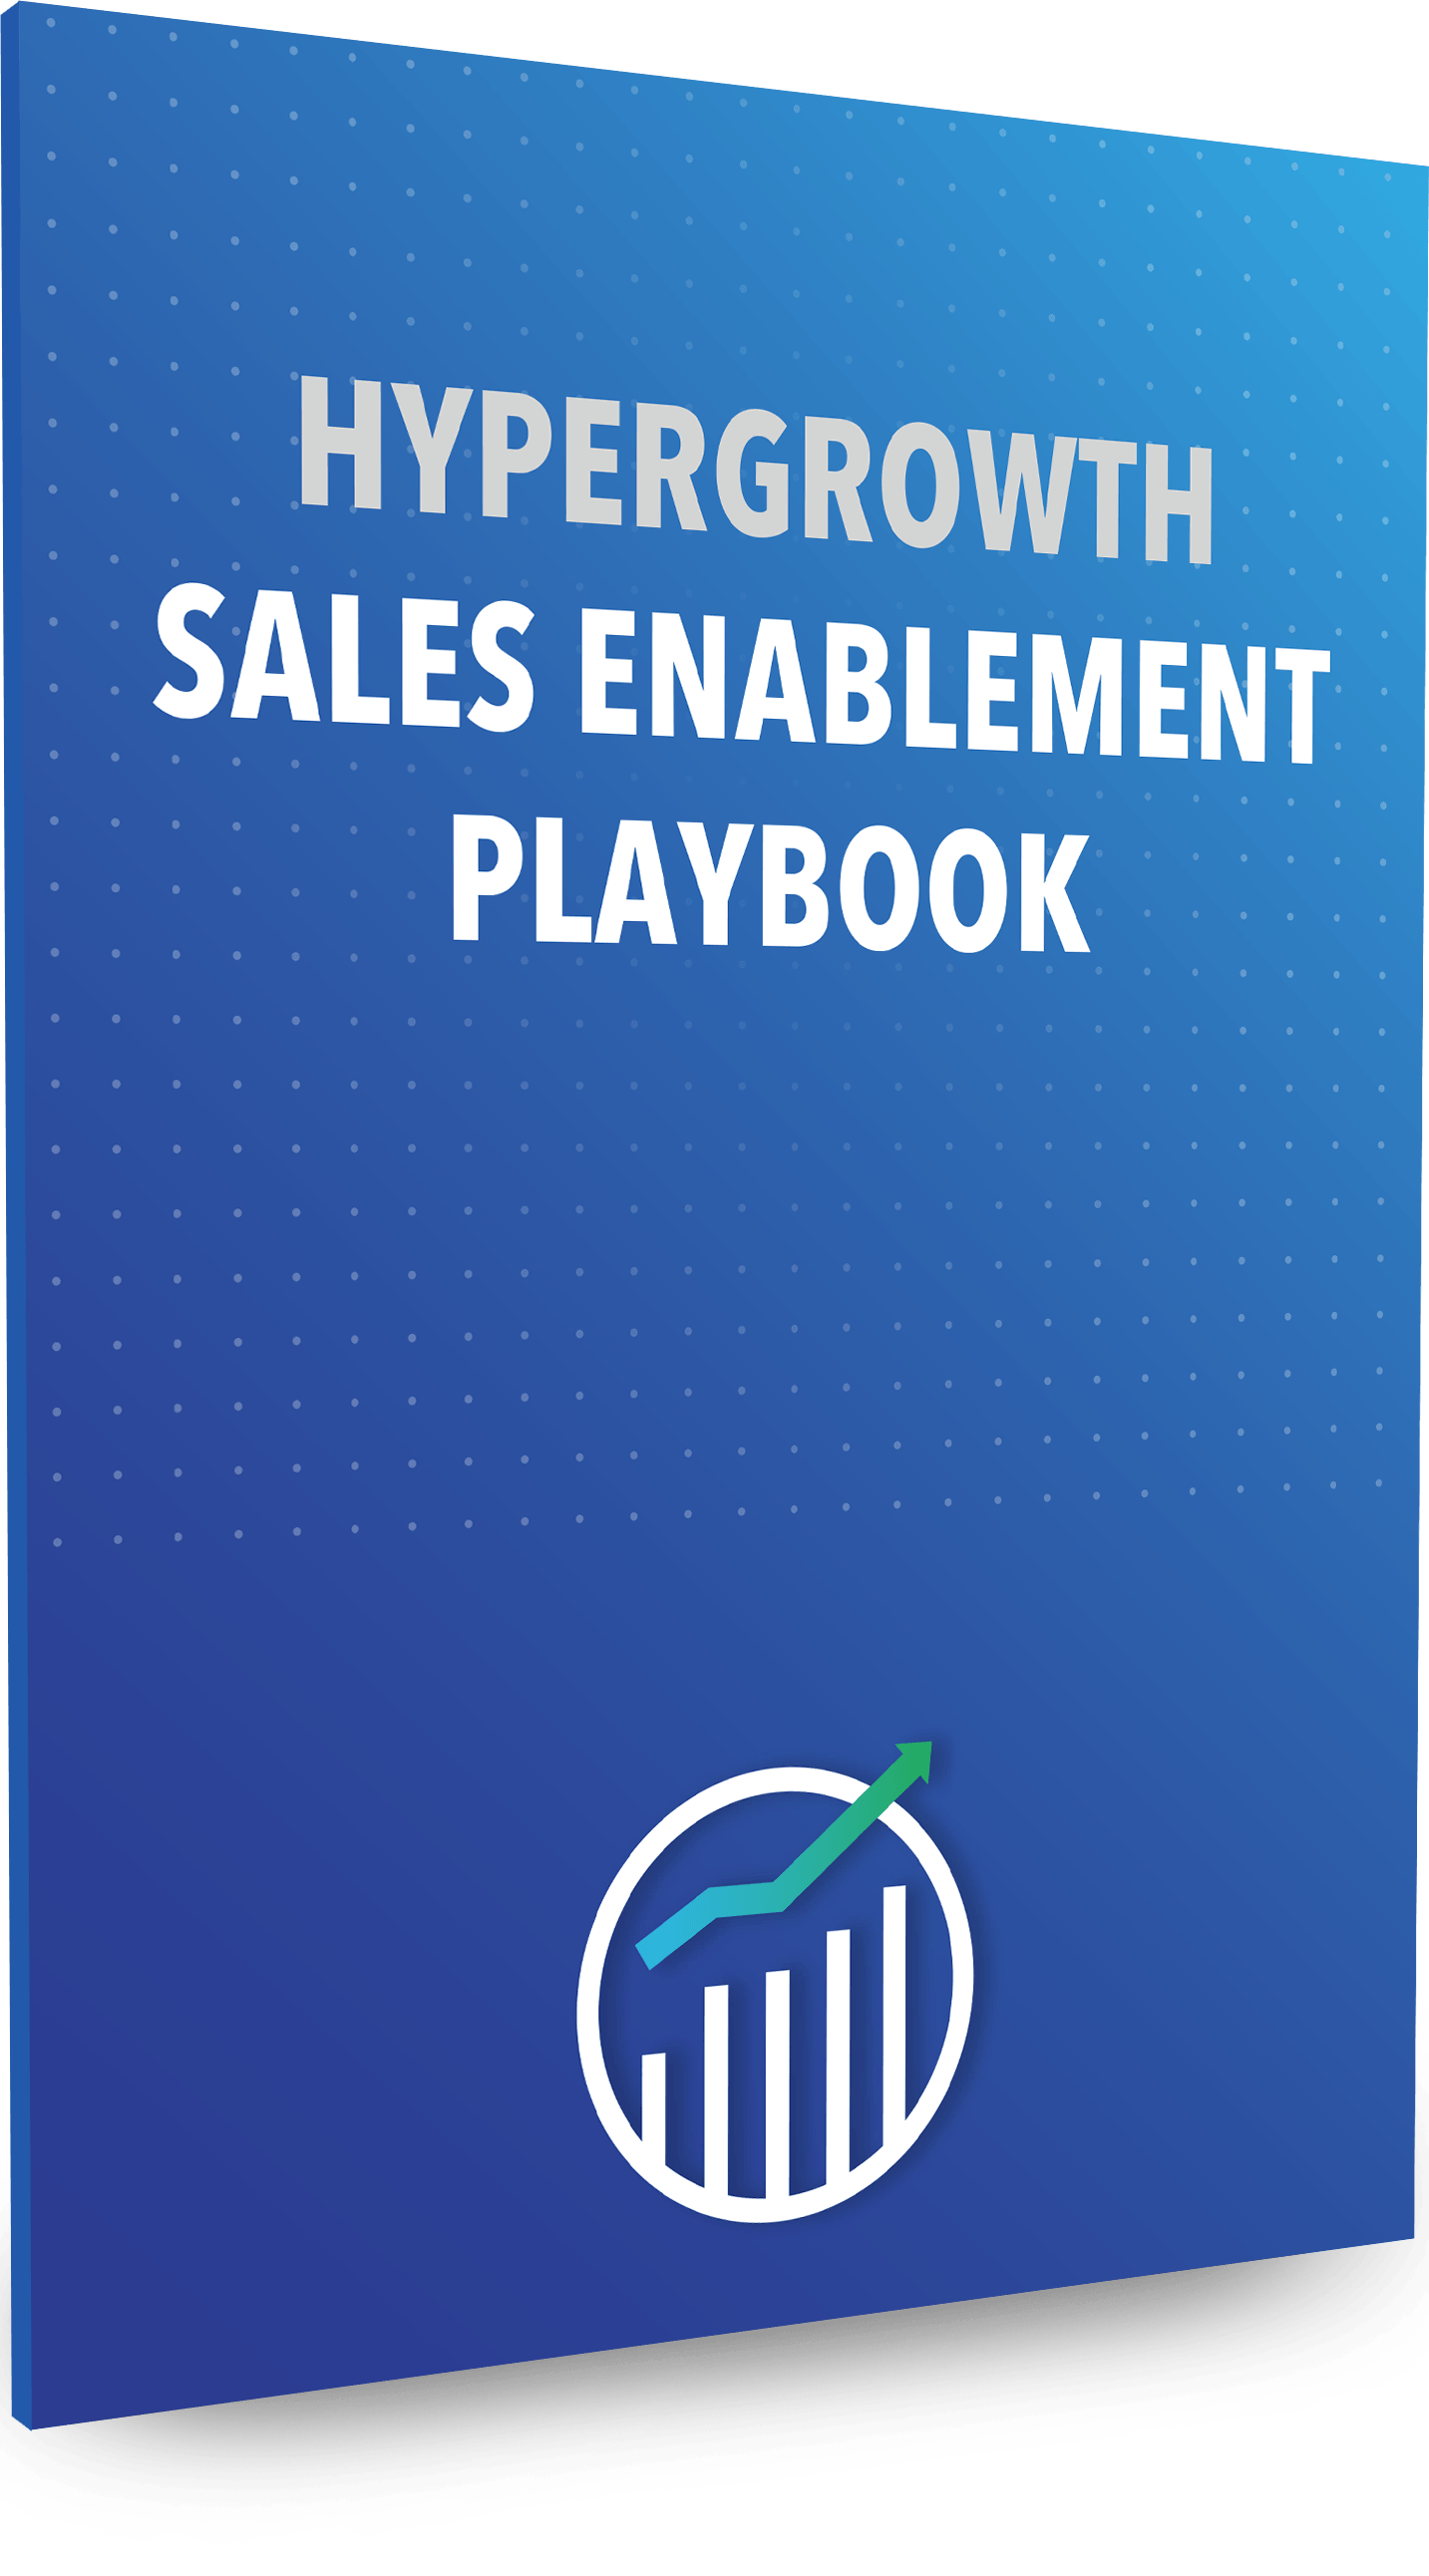 Download “Hypergrowth Sales Enablement Playbook” Ebook